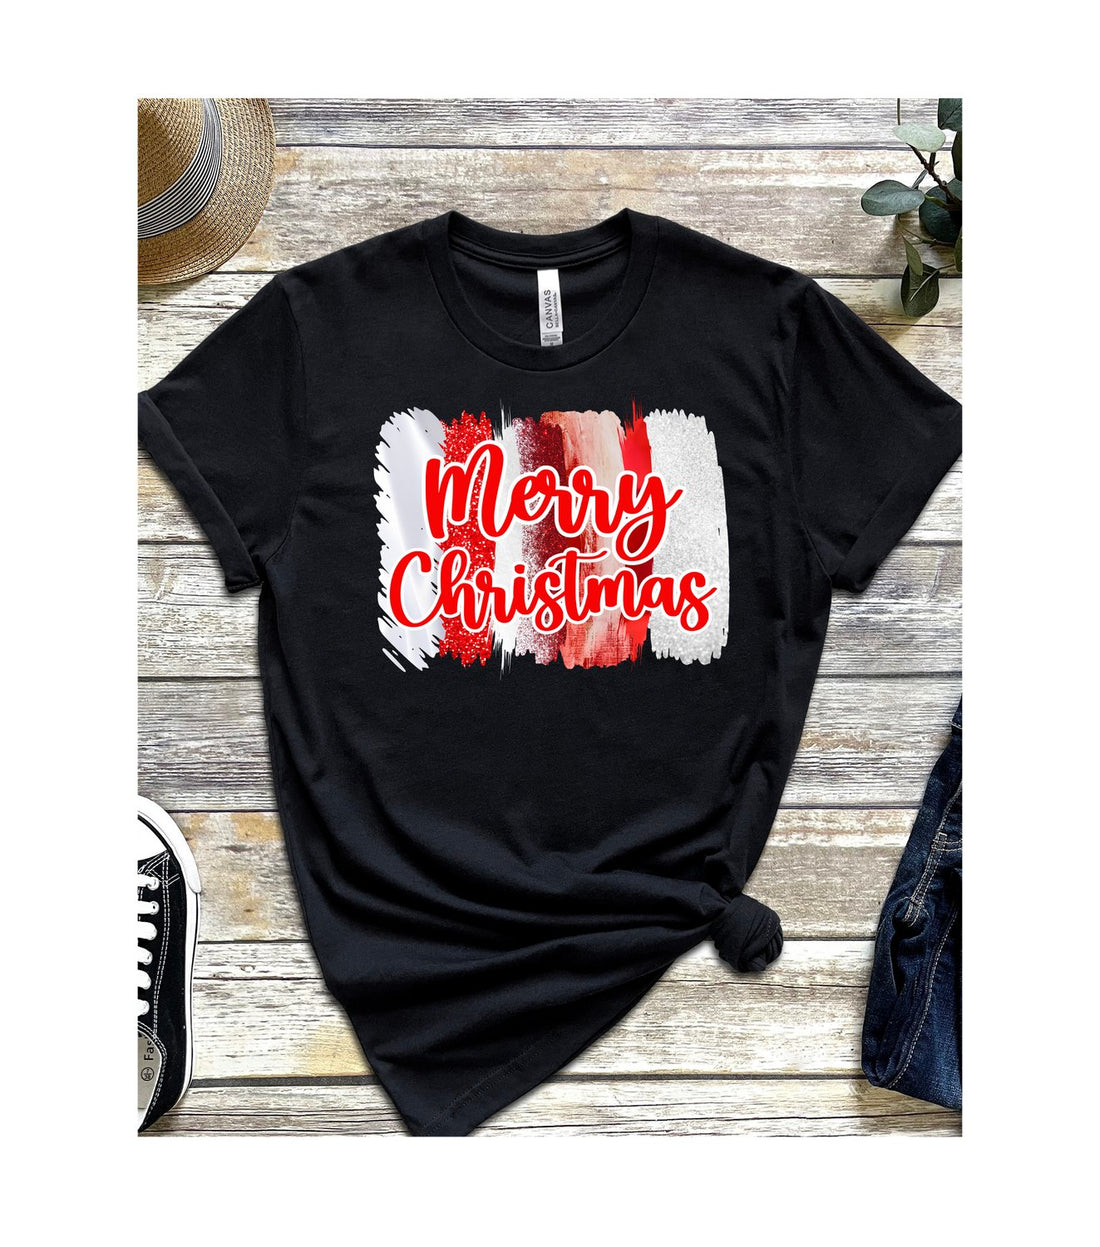 Merry Christmas Swipe - T-Shirts - Positively Sassy - Merry Christmas Swipe